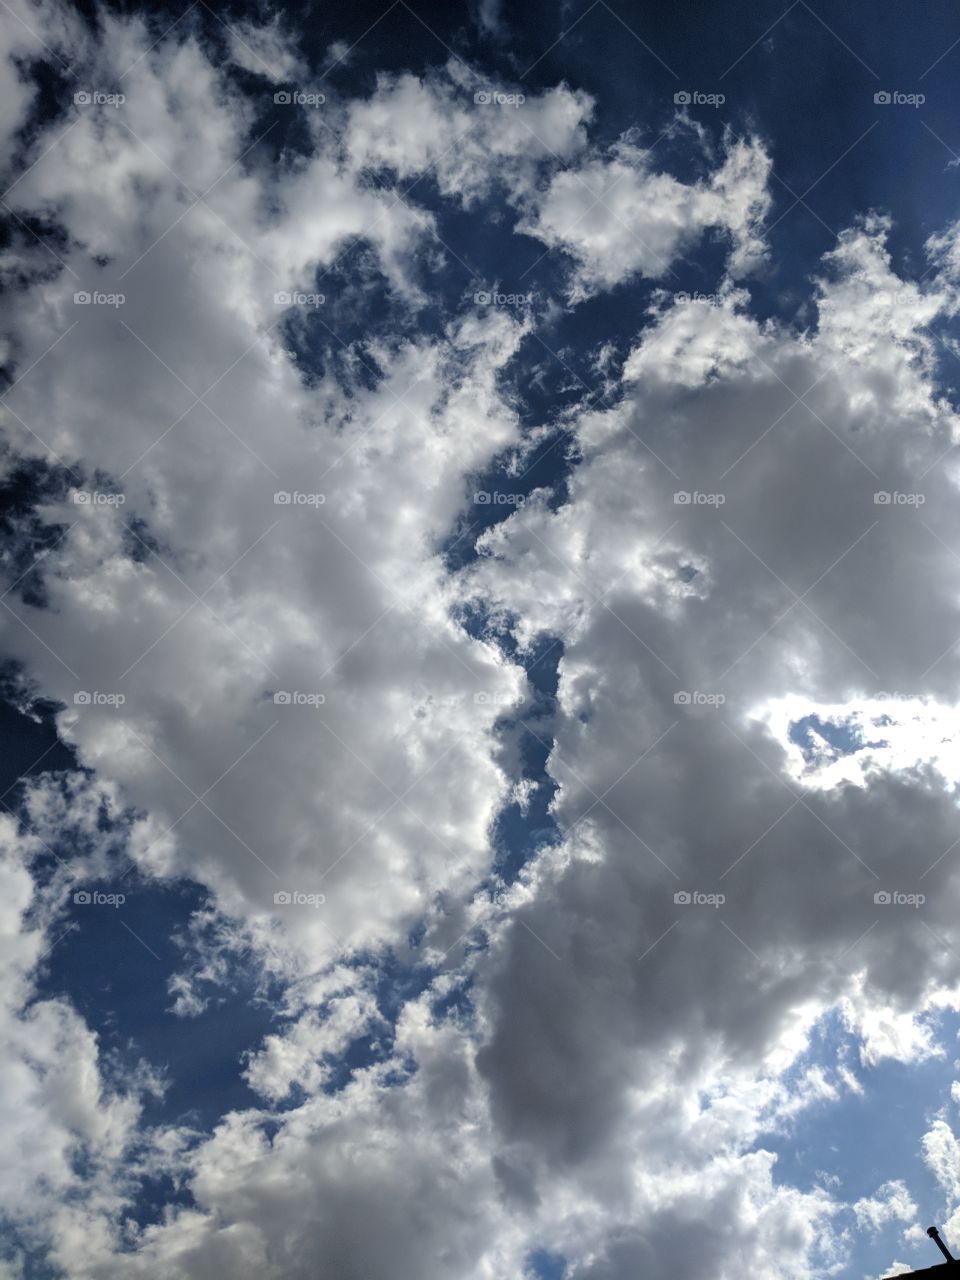 Stunning clouds over Las Vegas